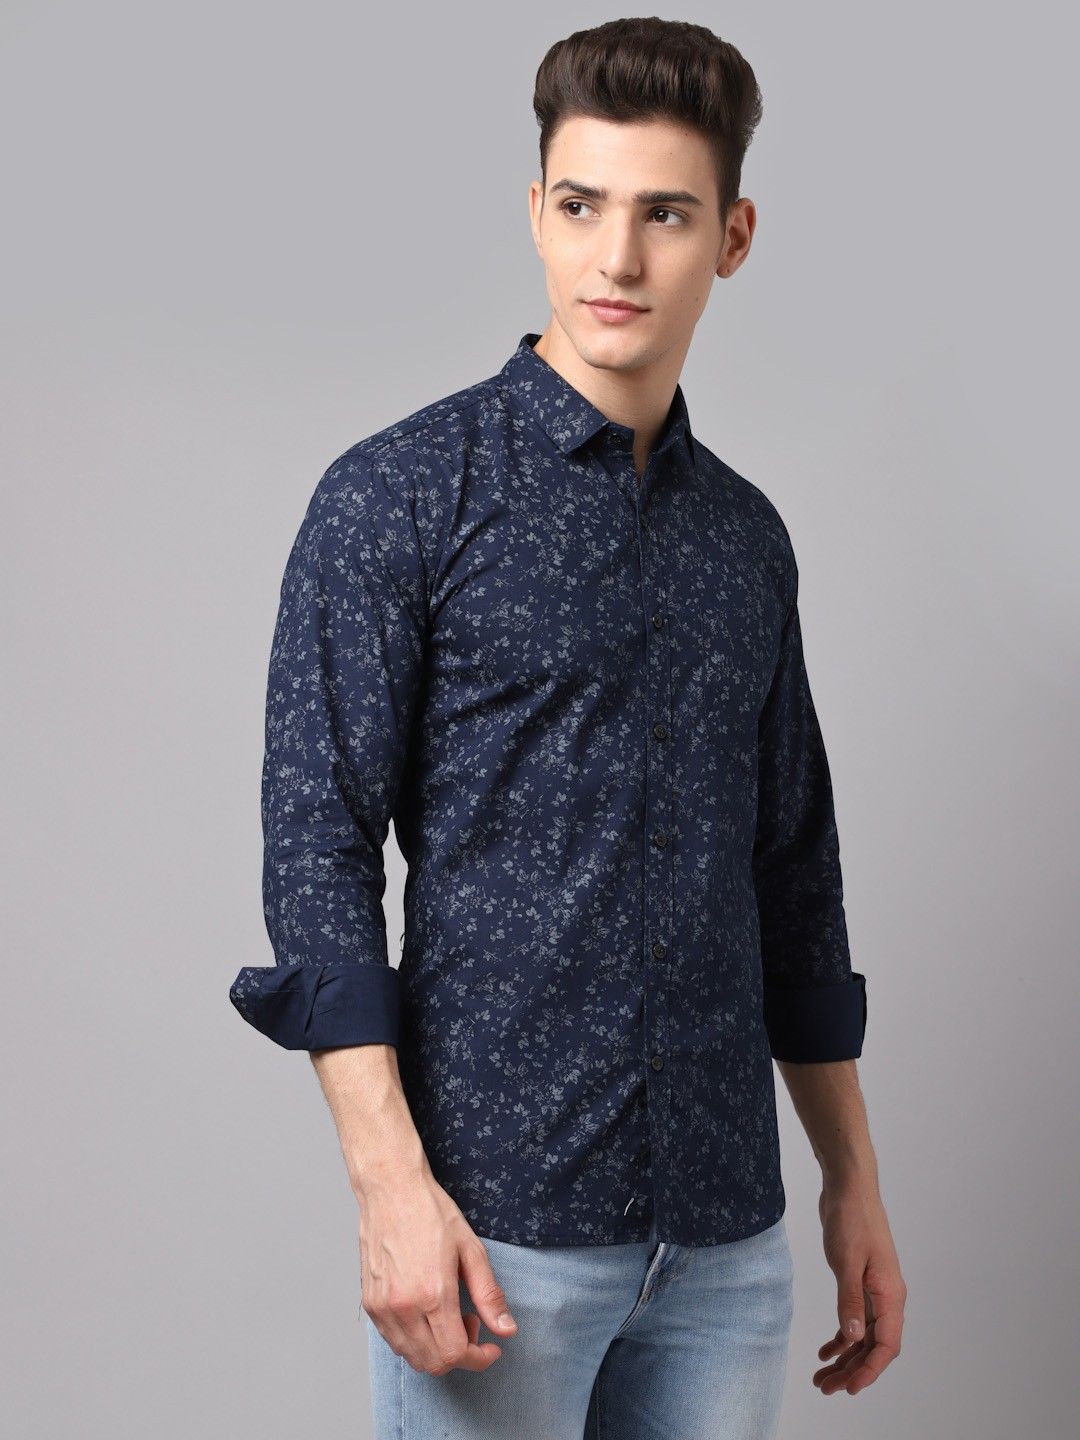 Men's Printed Cotton Blend Dark Blue Shirts